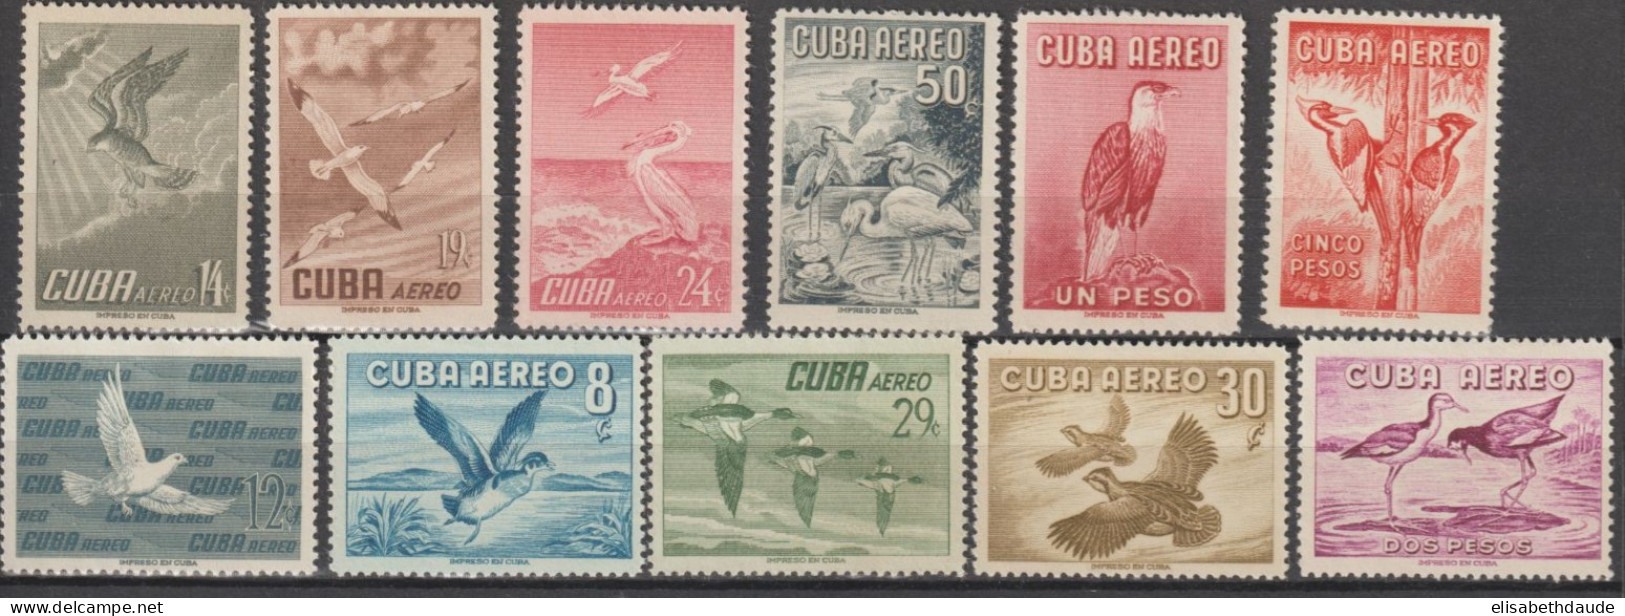 C UBA - 1957 - POSTE AERIENNE - SERIE COMPLETE OISEAUX / BIRDS YVERT N°135/145 ** / * MNH / MLH - COTE YVERT = 90 EUR - Airmail